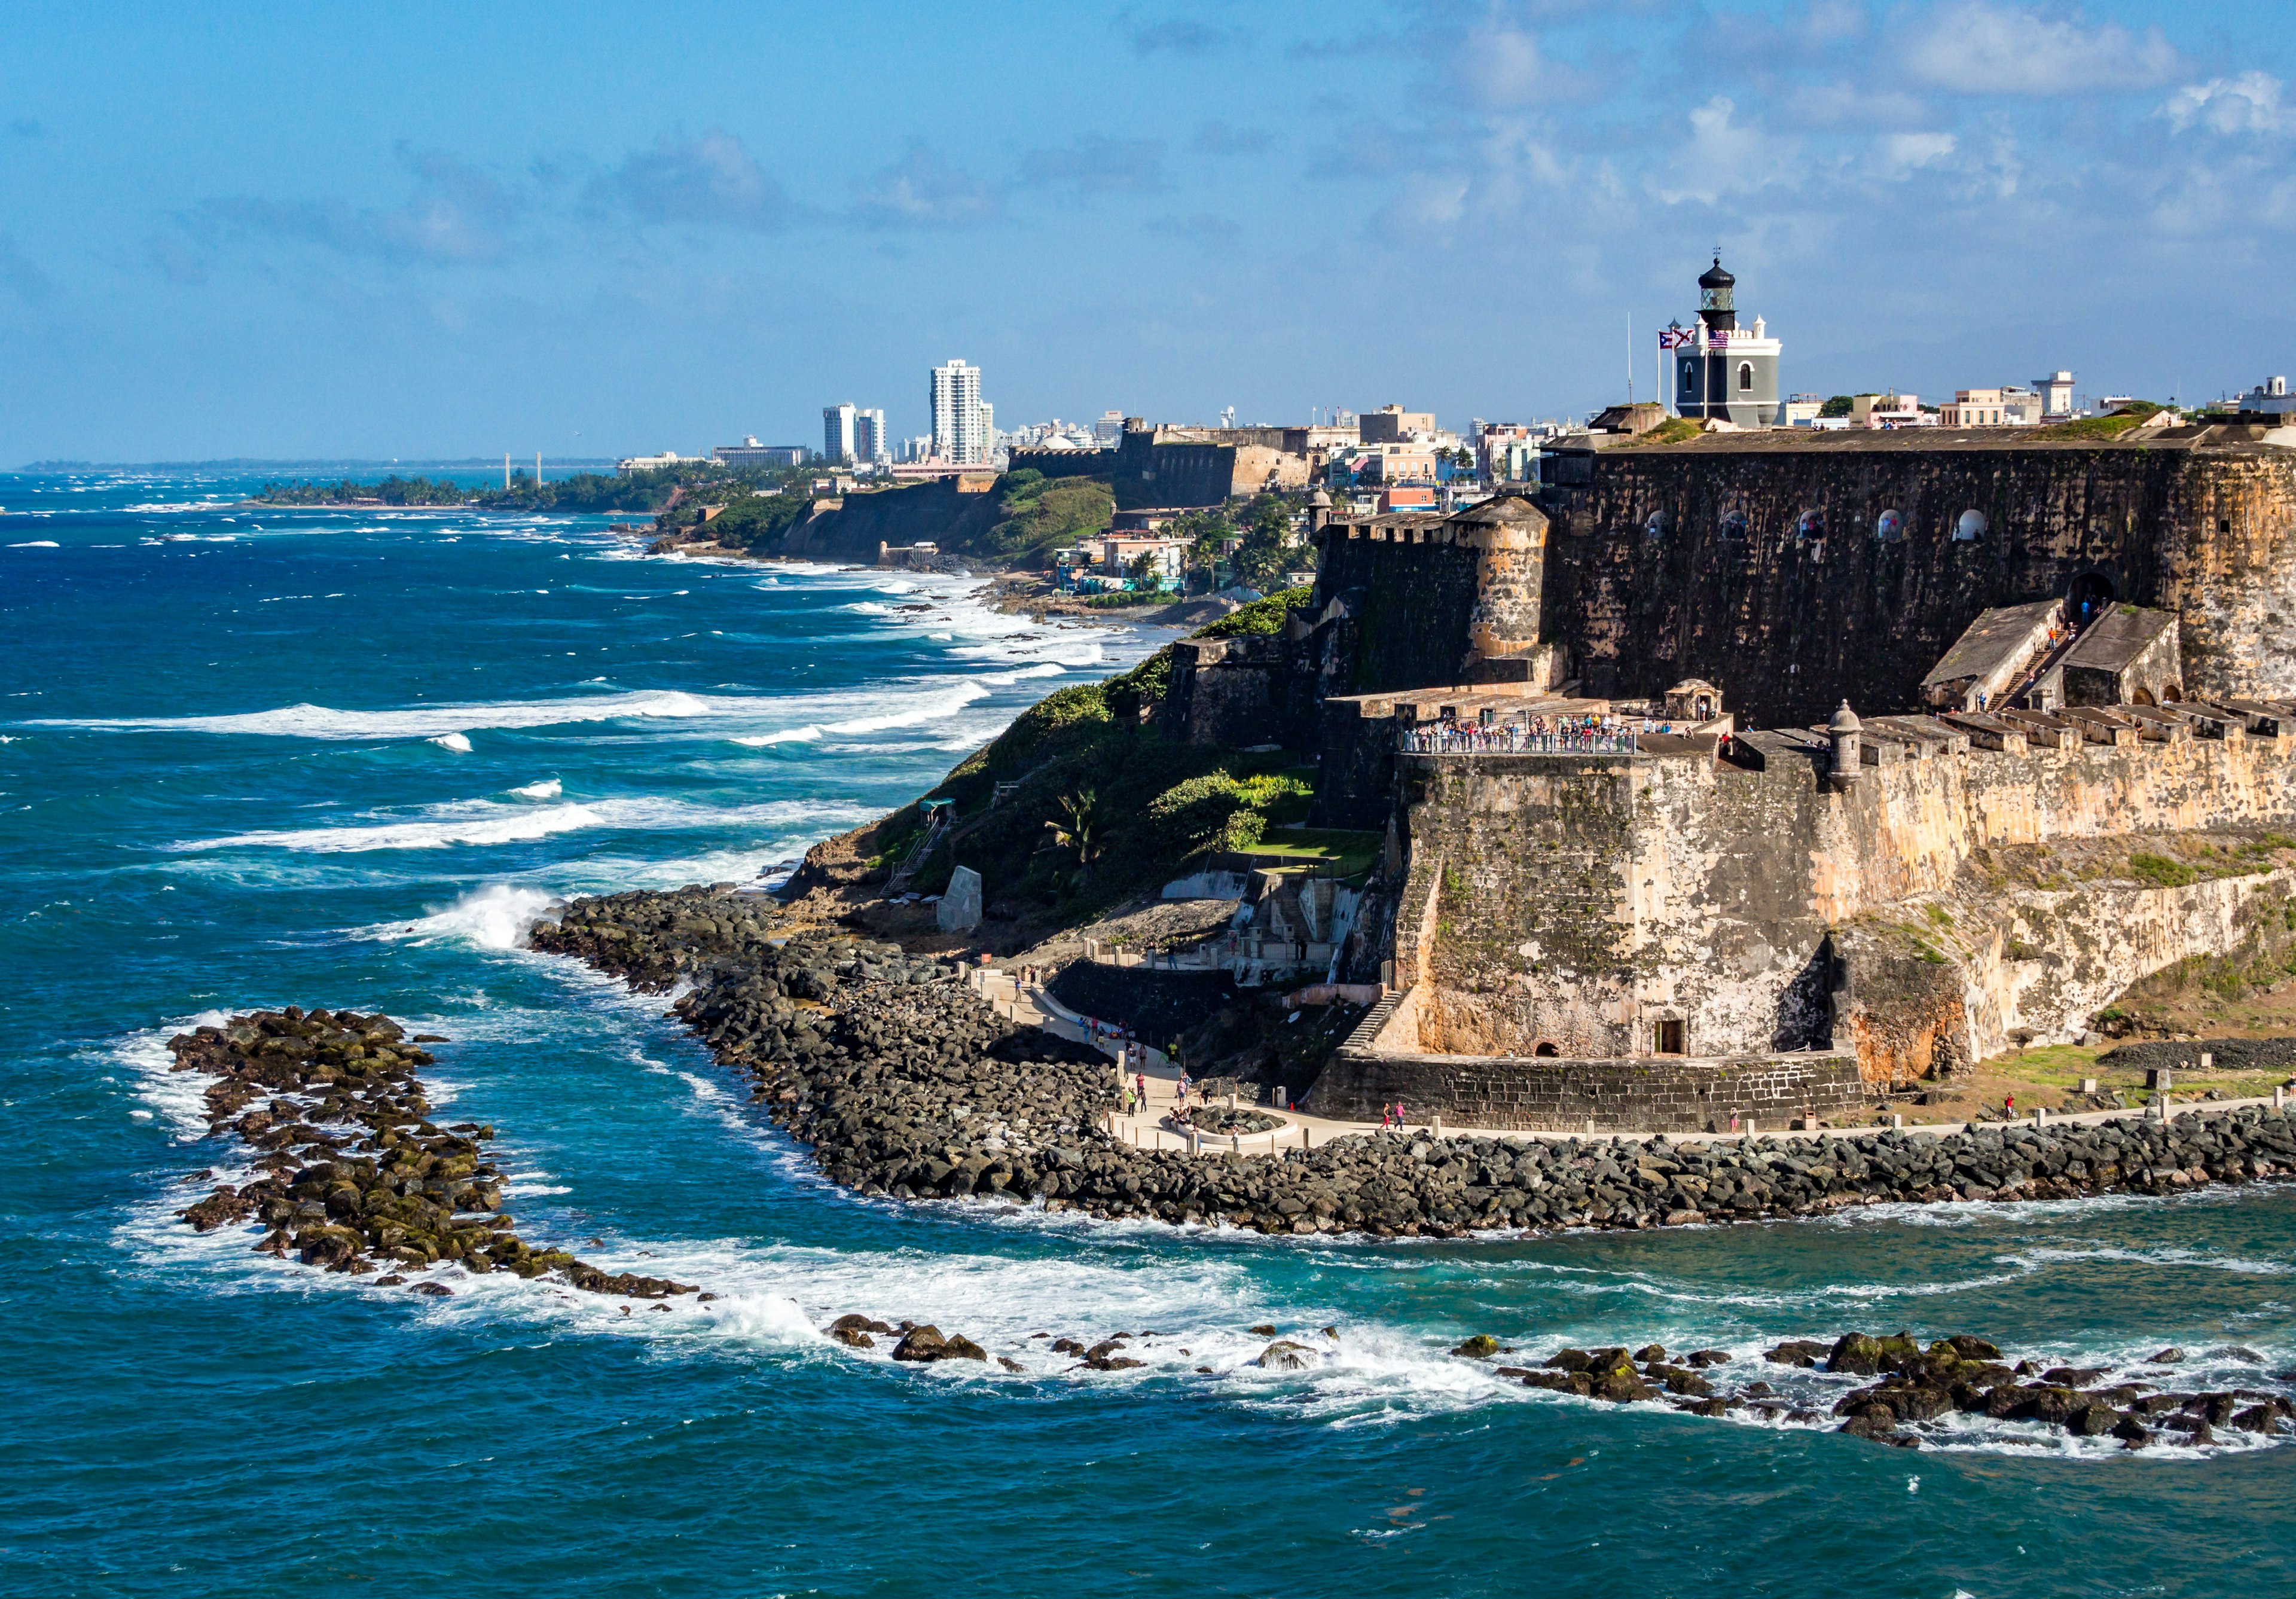 Historical ruins of Castillo San Felipe del Morro on the coast of San Juan.